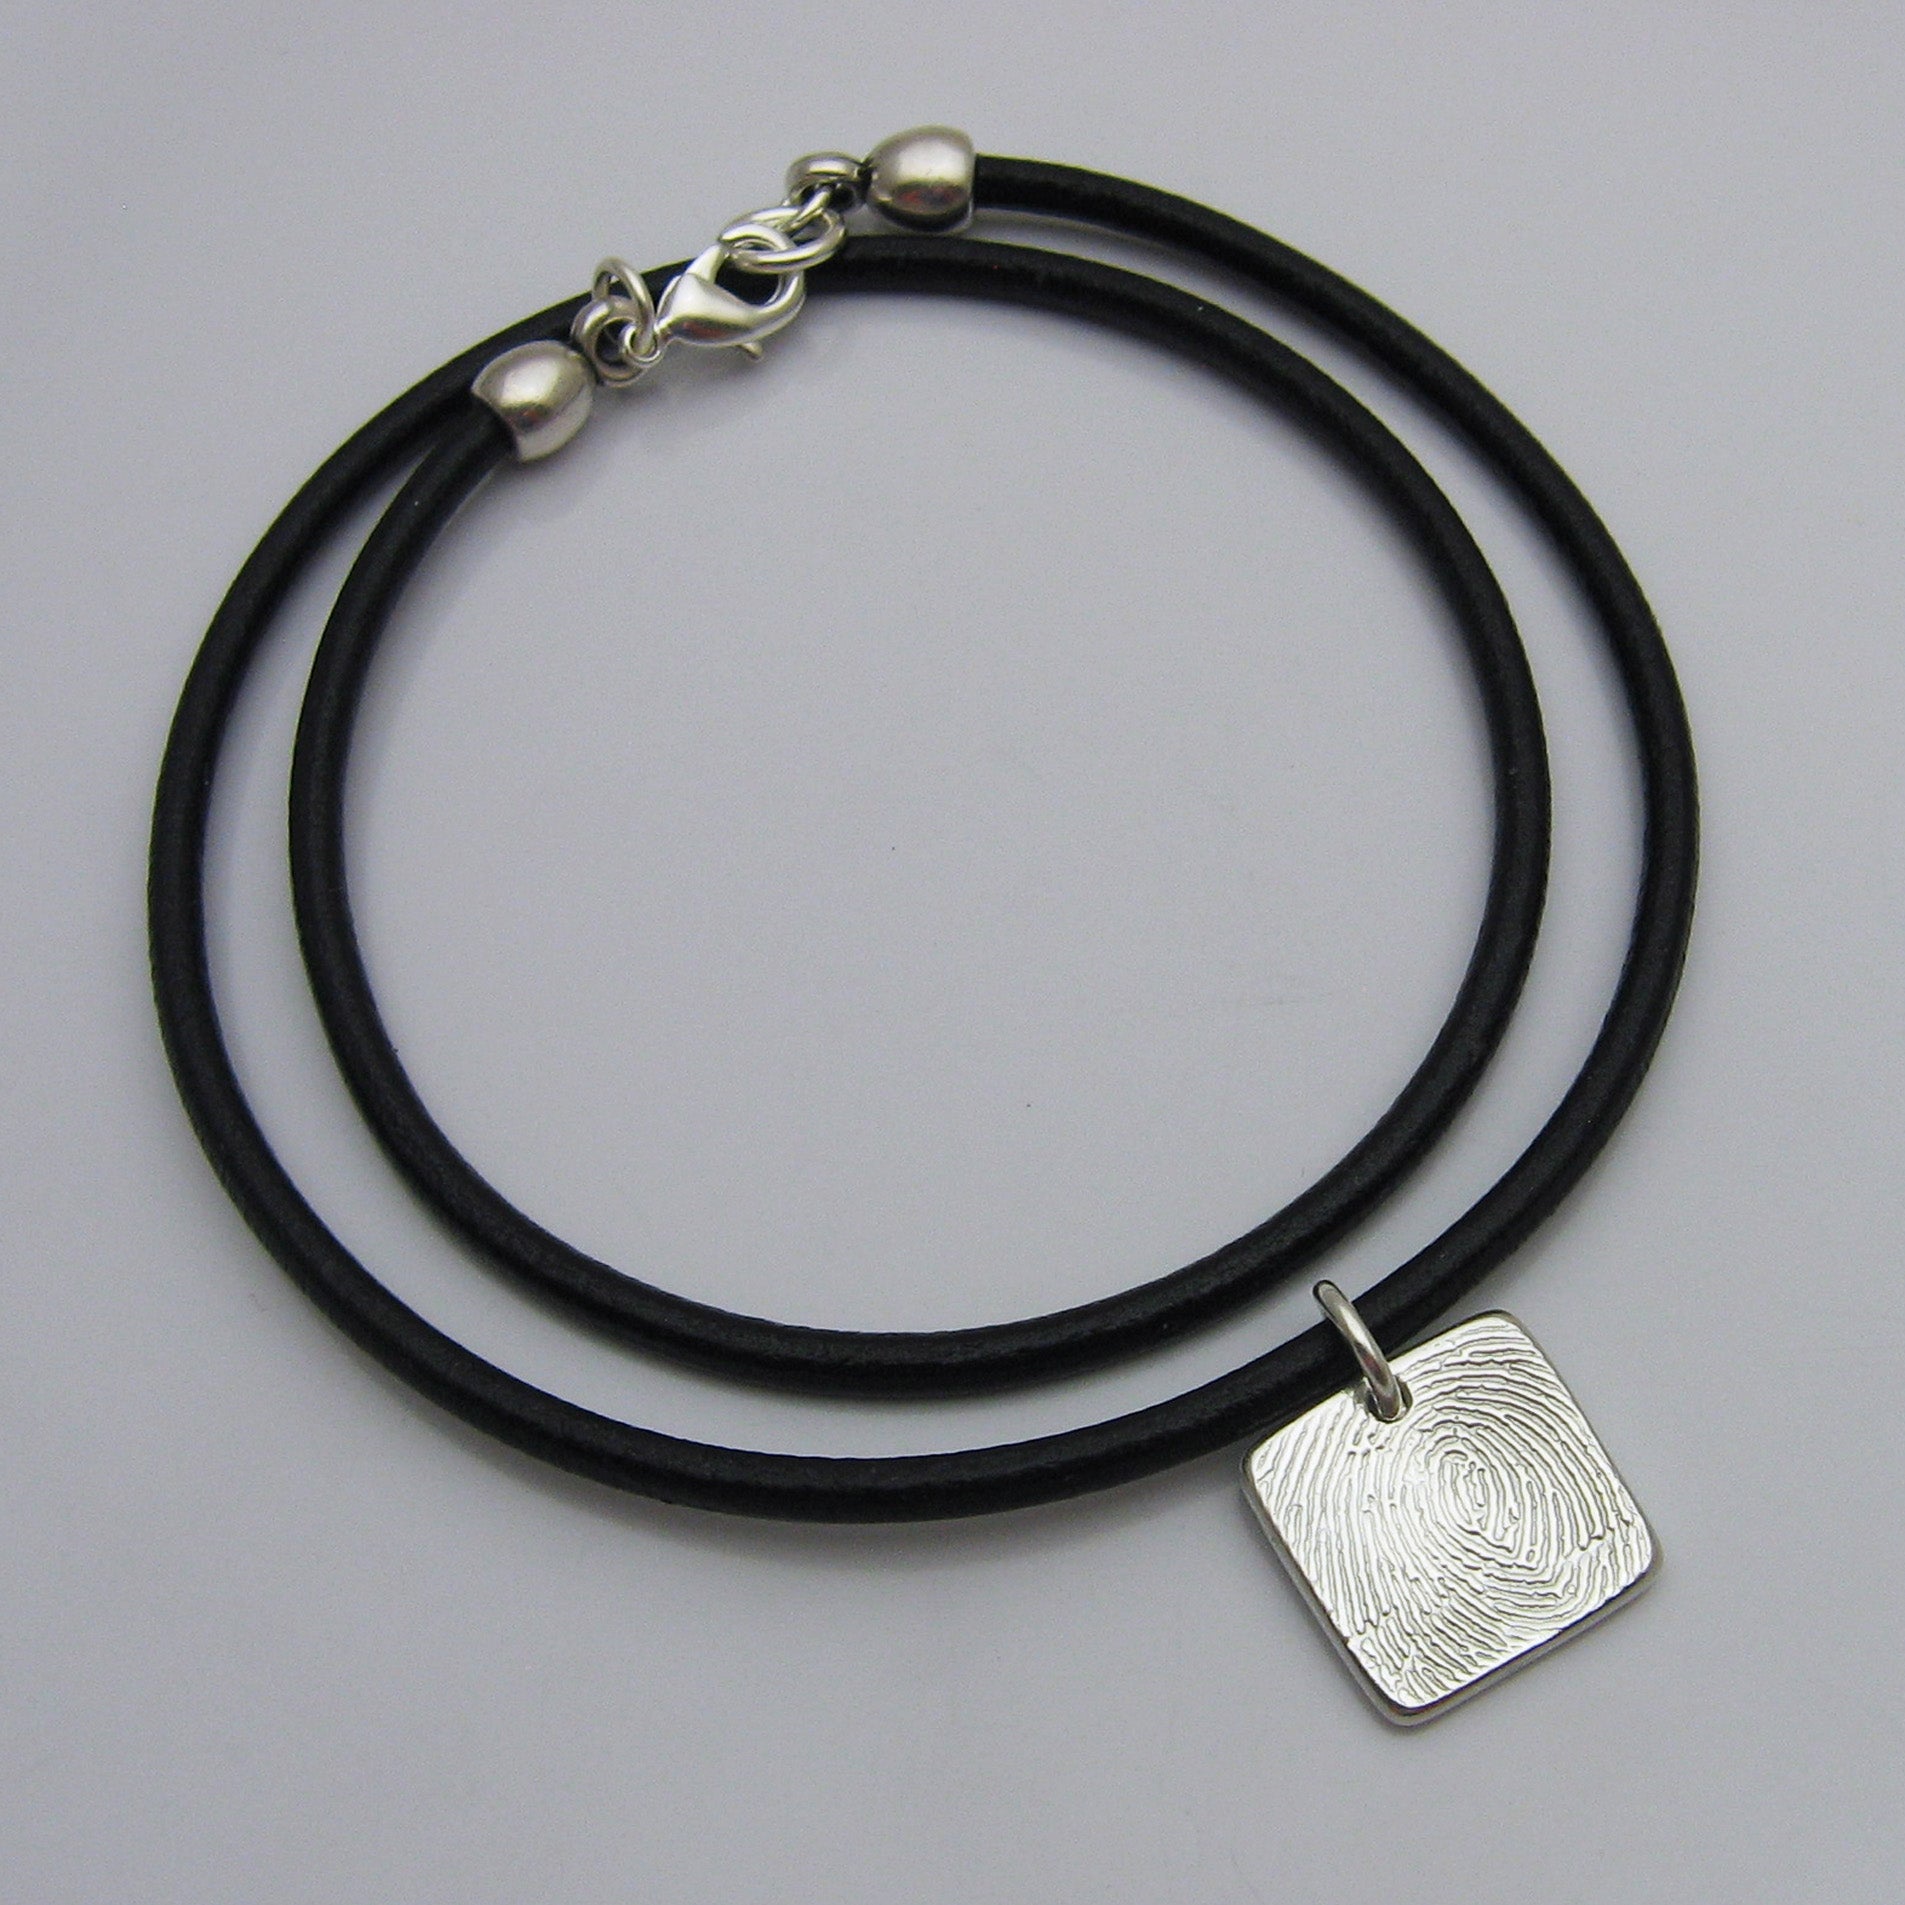 Square Fingerprint Pendant on Leather Cord Necklace